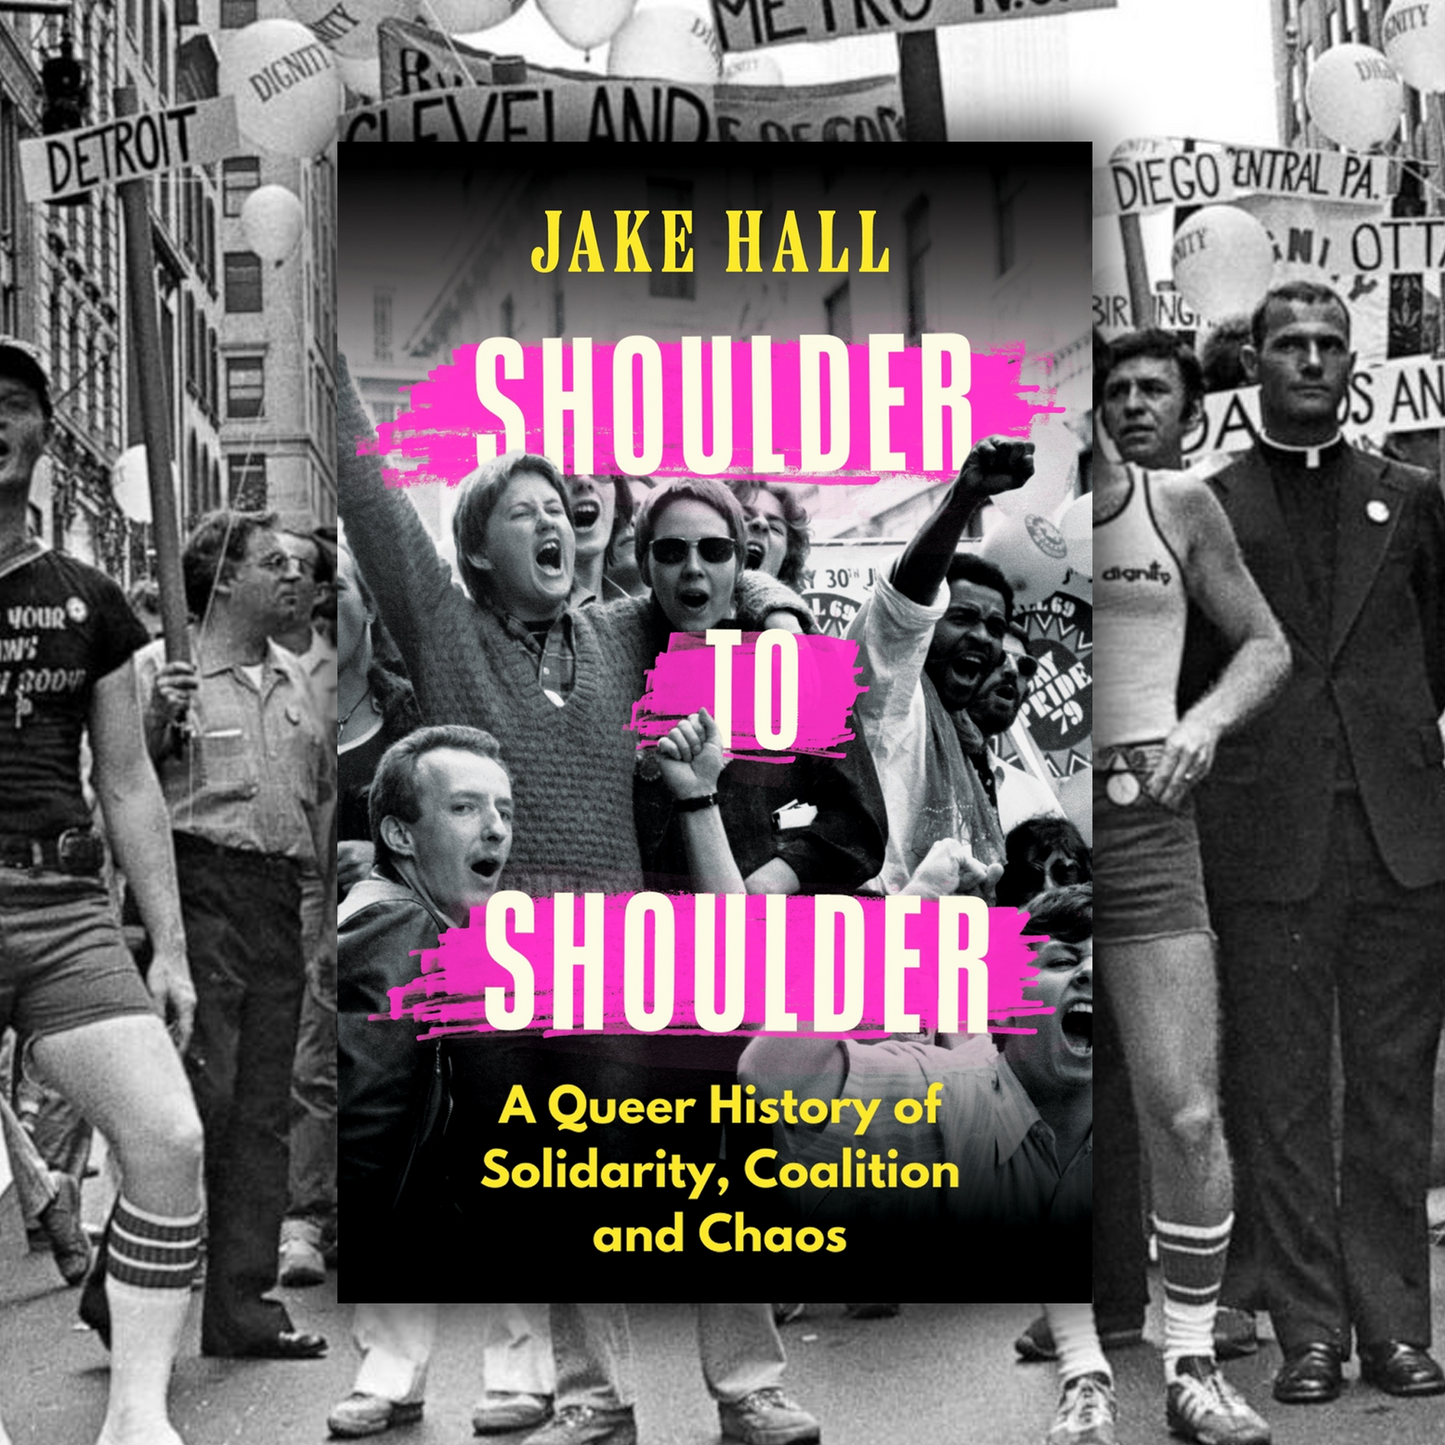 Shoulder to Shoulder: A History of Queer Solidarity with Jake Hall & Alyssa Lloyd